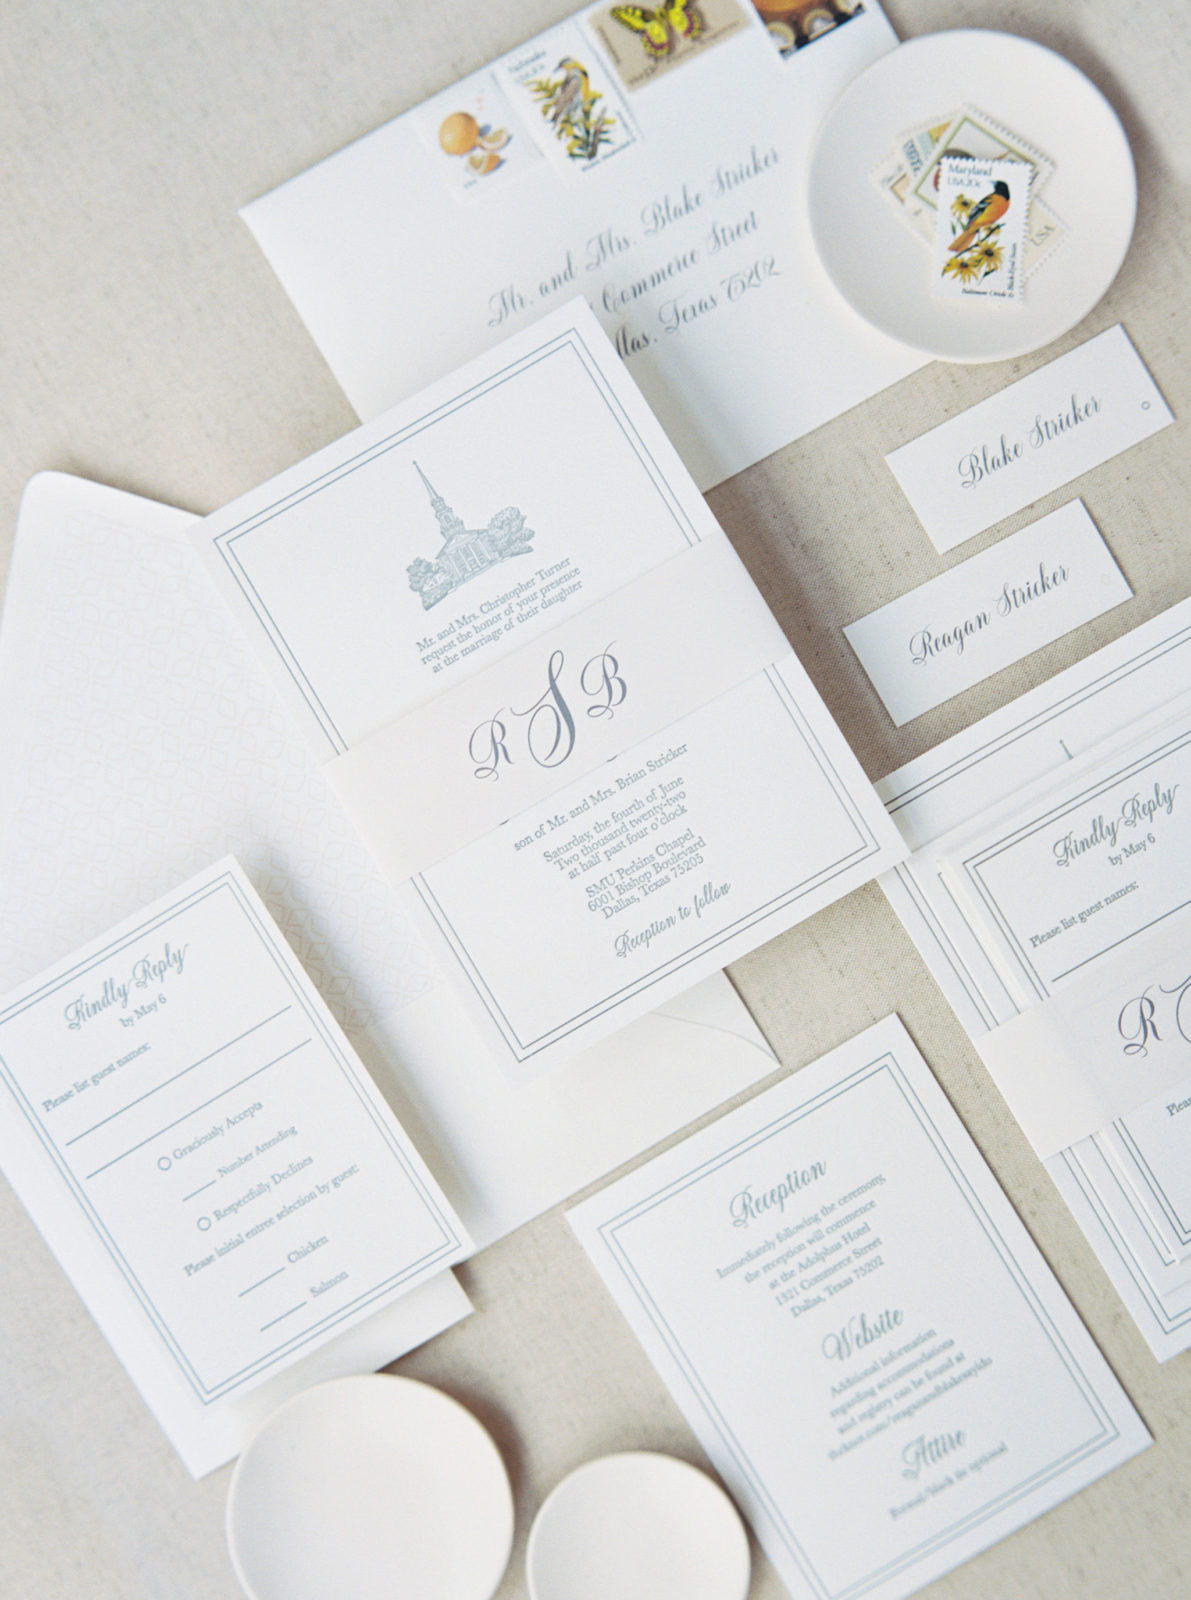 Black and white monogrammed wedding invitation suite